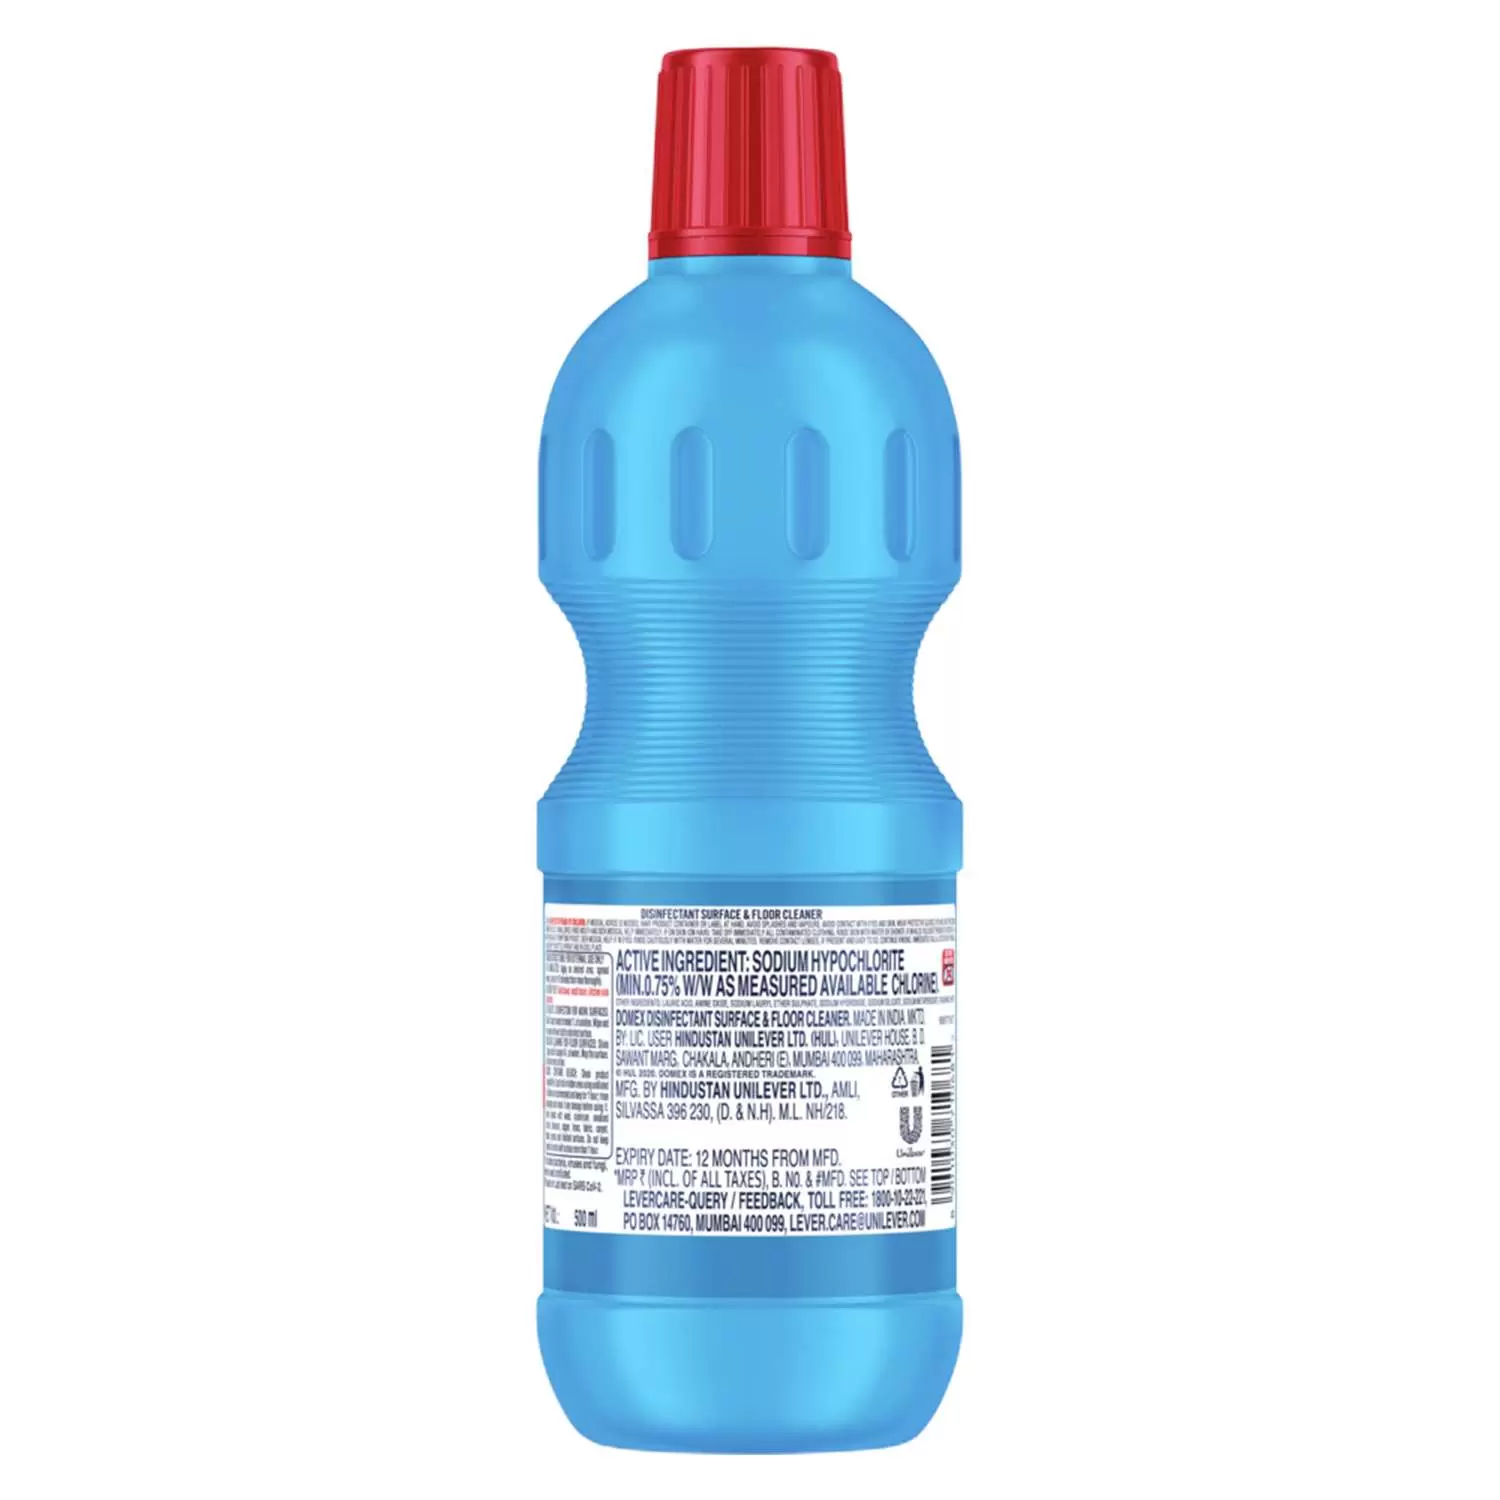 DOMEX DISINFECTANT FLOOR CLEANER (BLUE) 500 ml